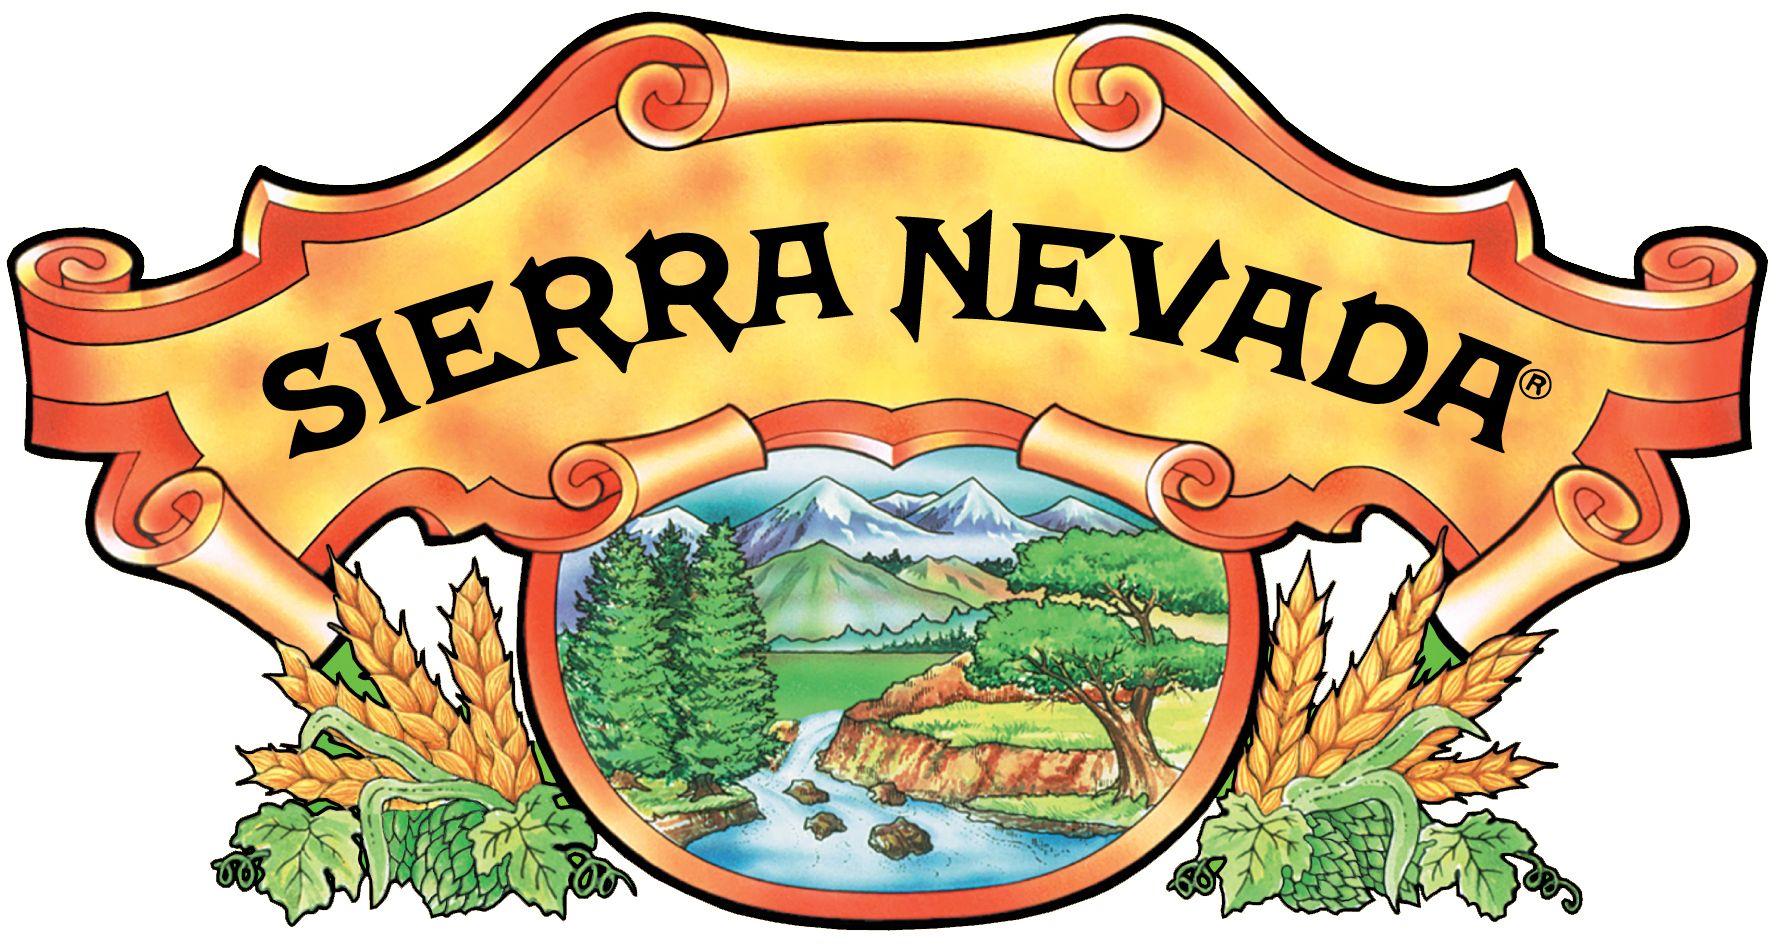 Sierra Nevada Brewing Logo - Sierra Nevada Finds Rich Water Source | Independent Beers